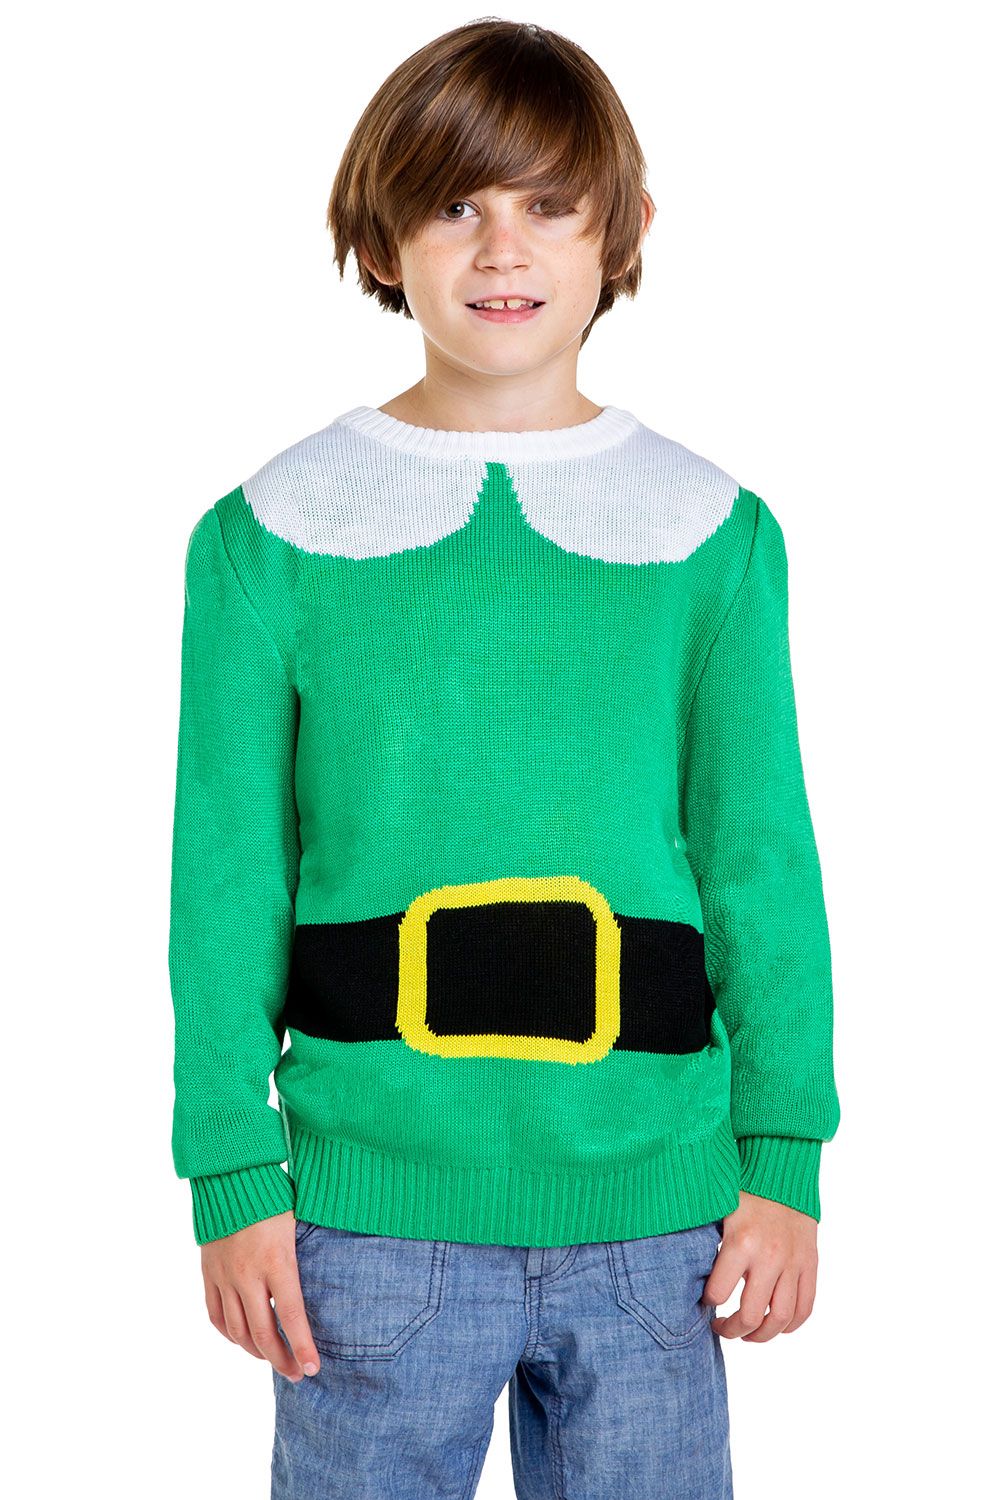 Boys Elf Sweater